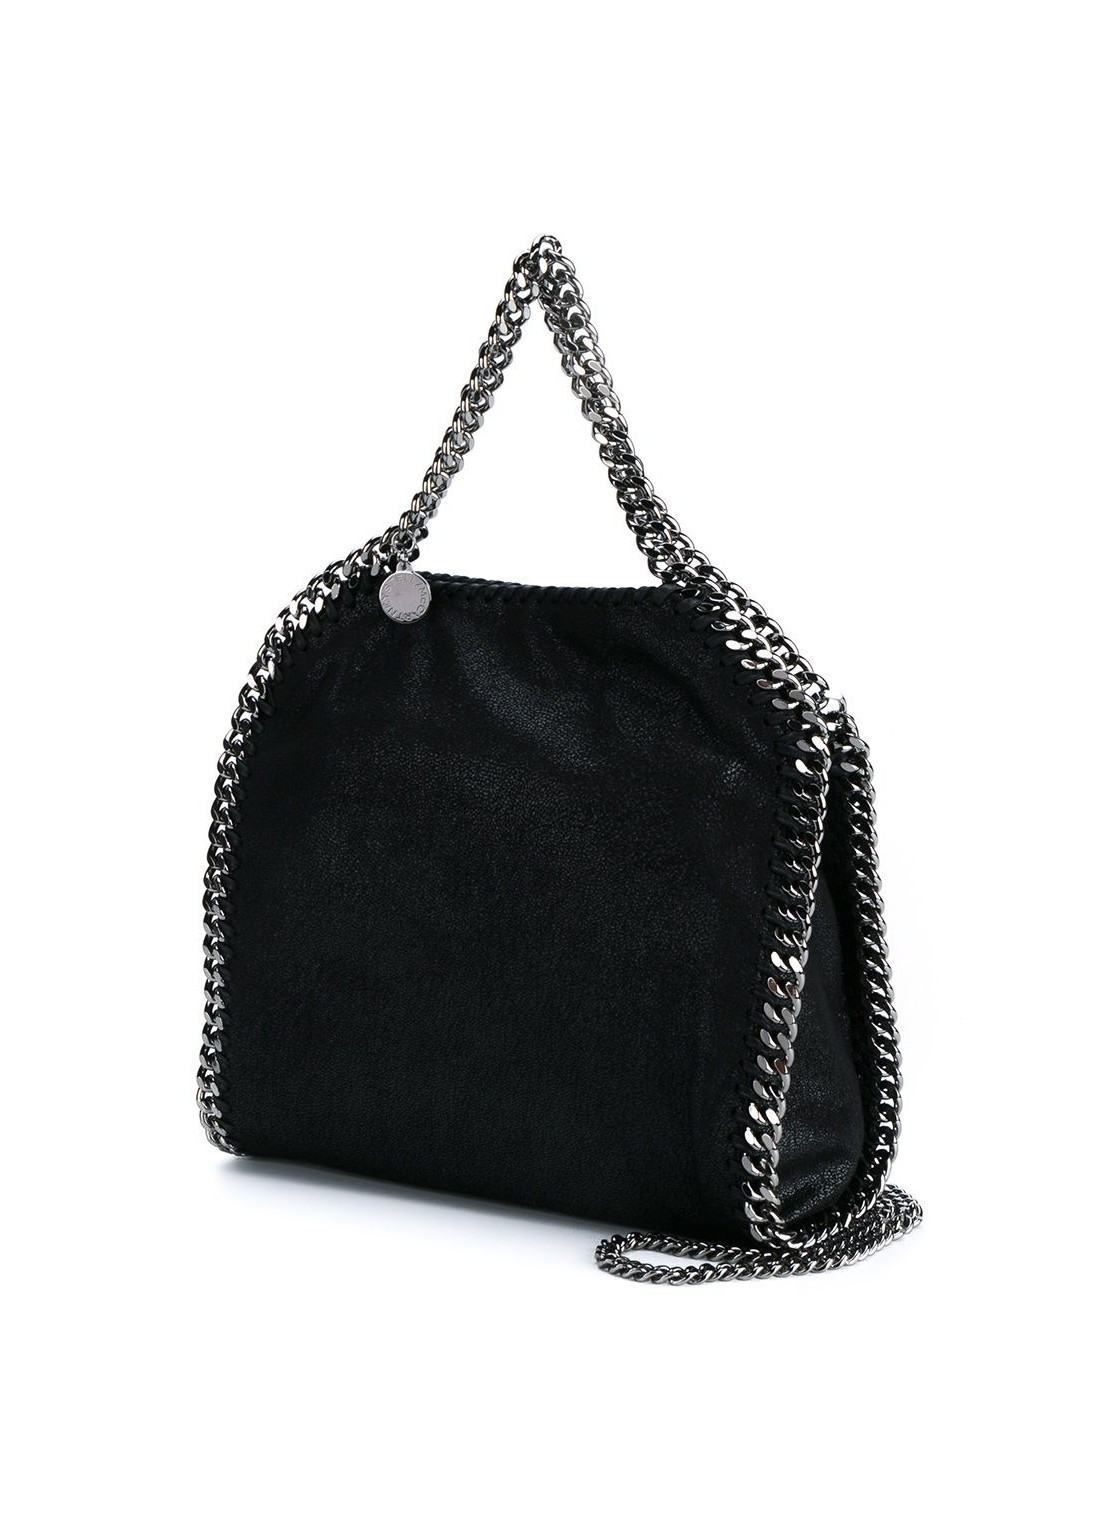 Handbag stella mccartney handbag woman mini tote shaggy de 371223w9132 1000 talla T/U
 